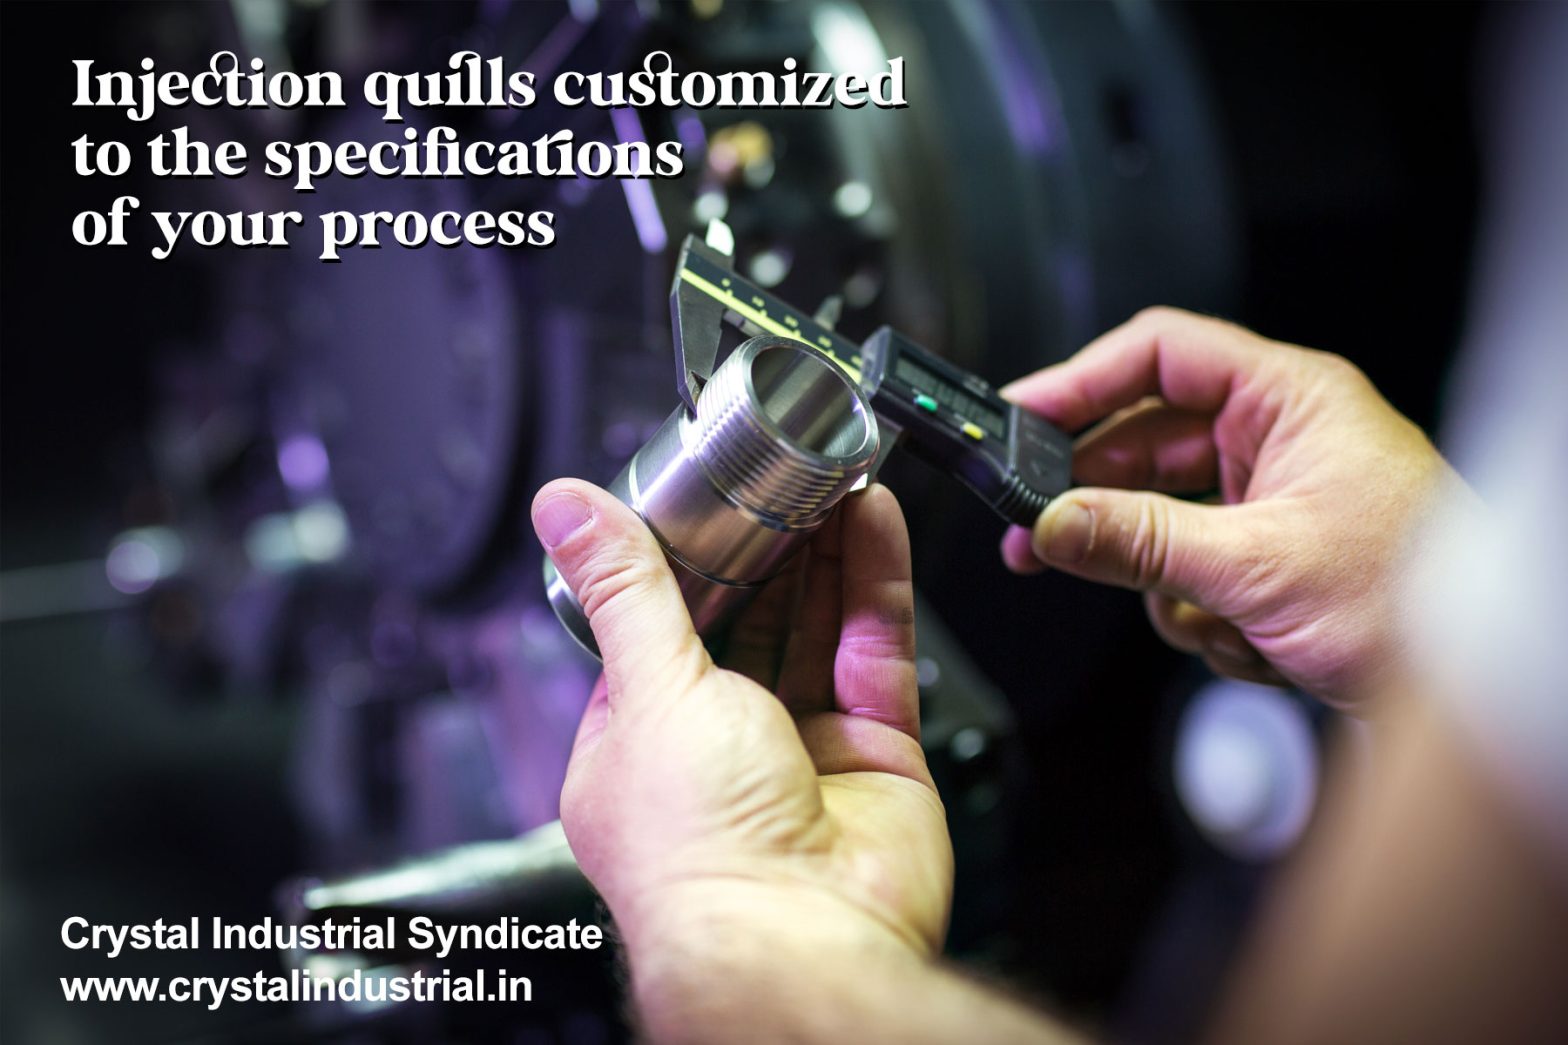 Custom-designed injection quills